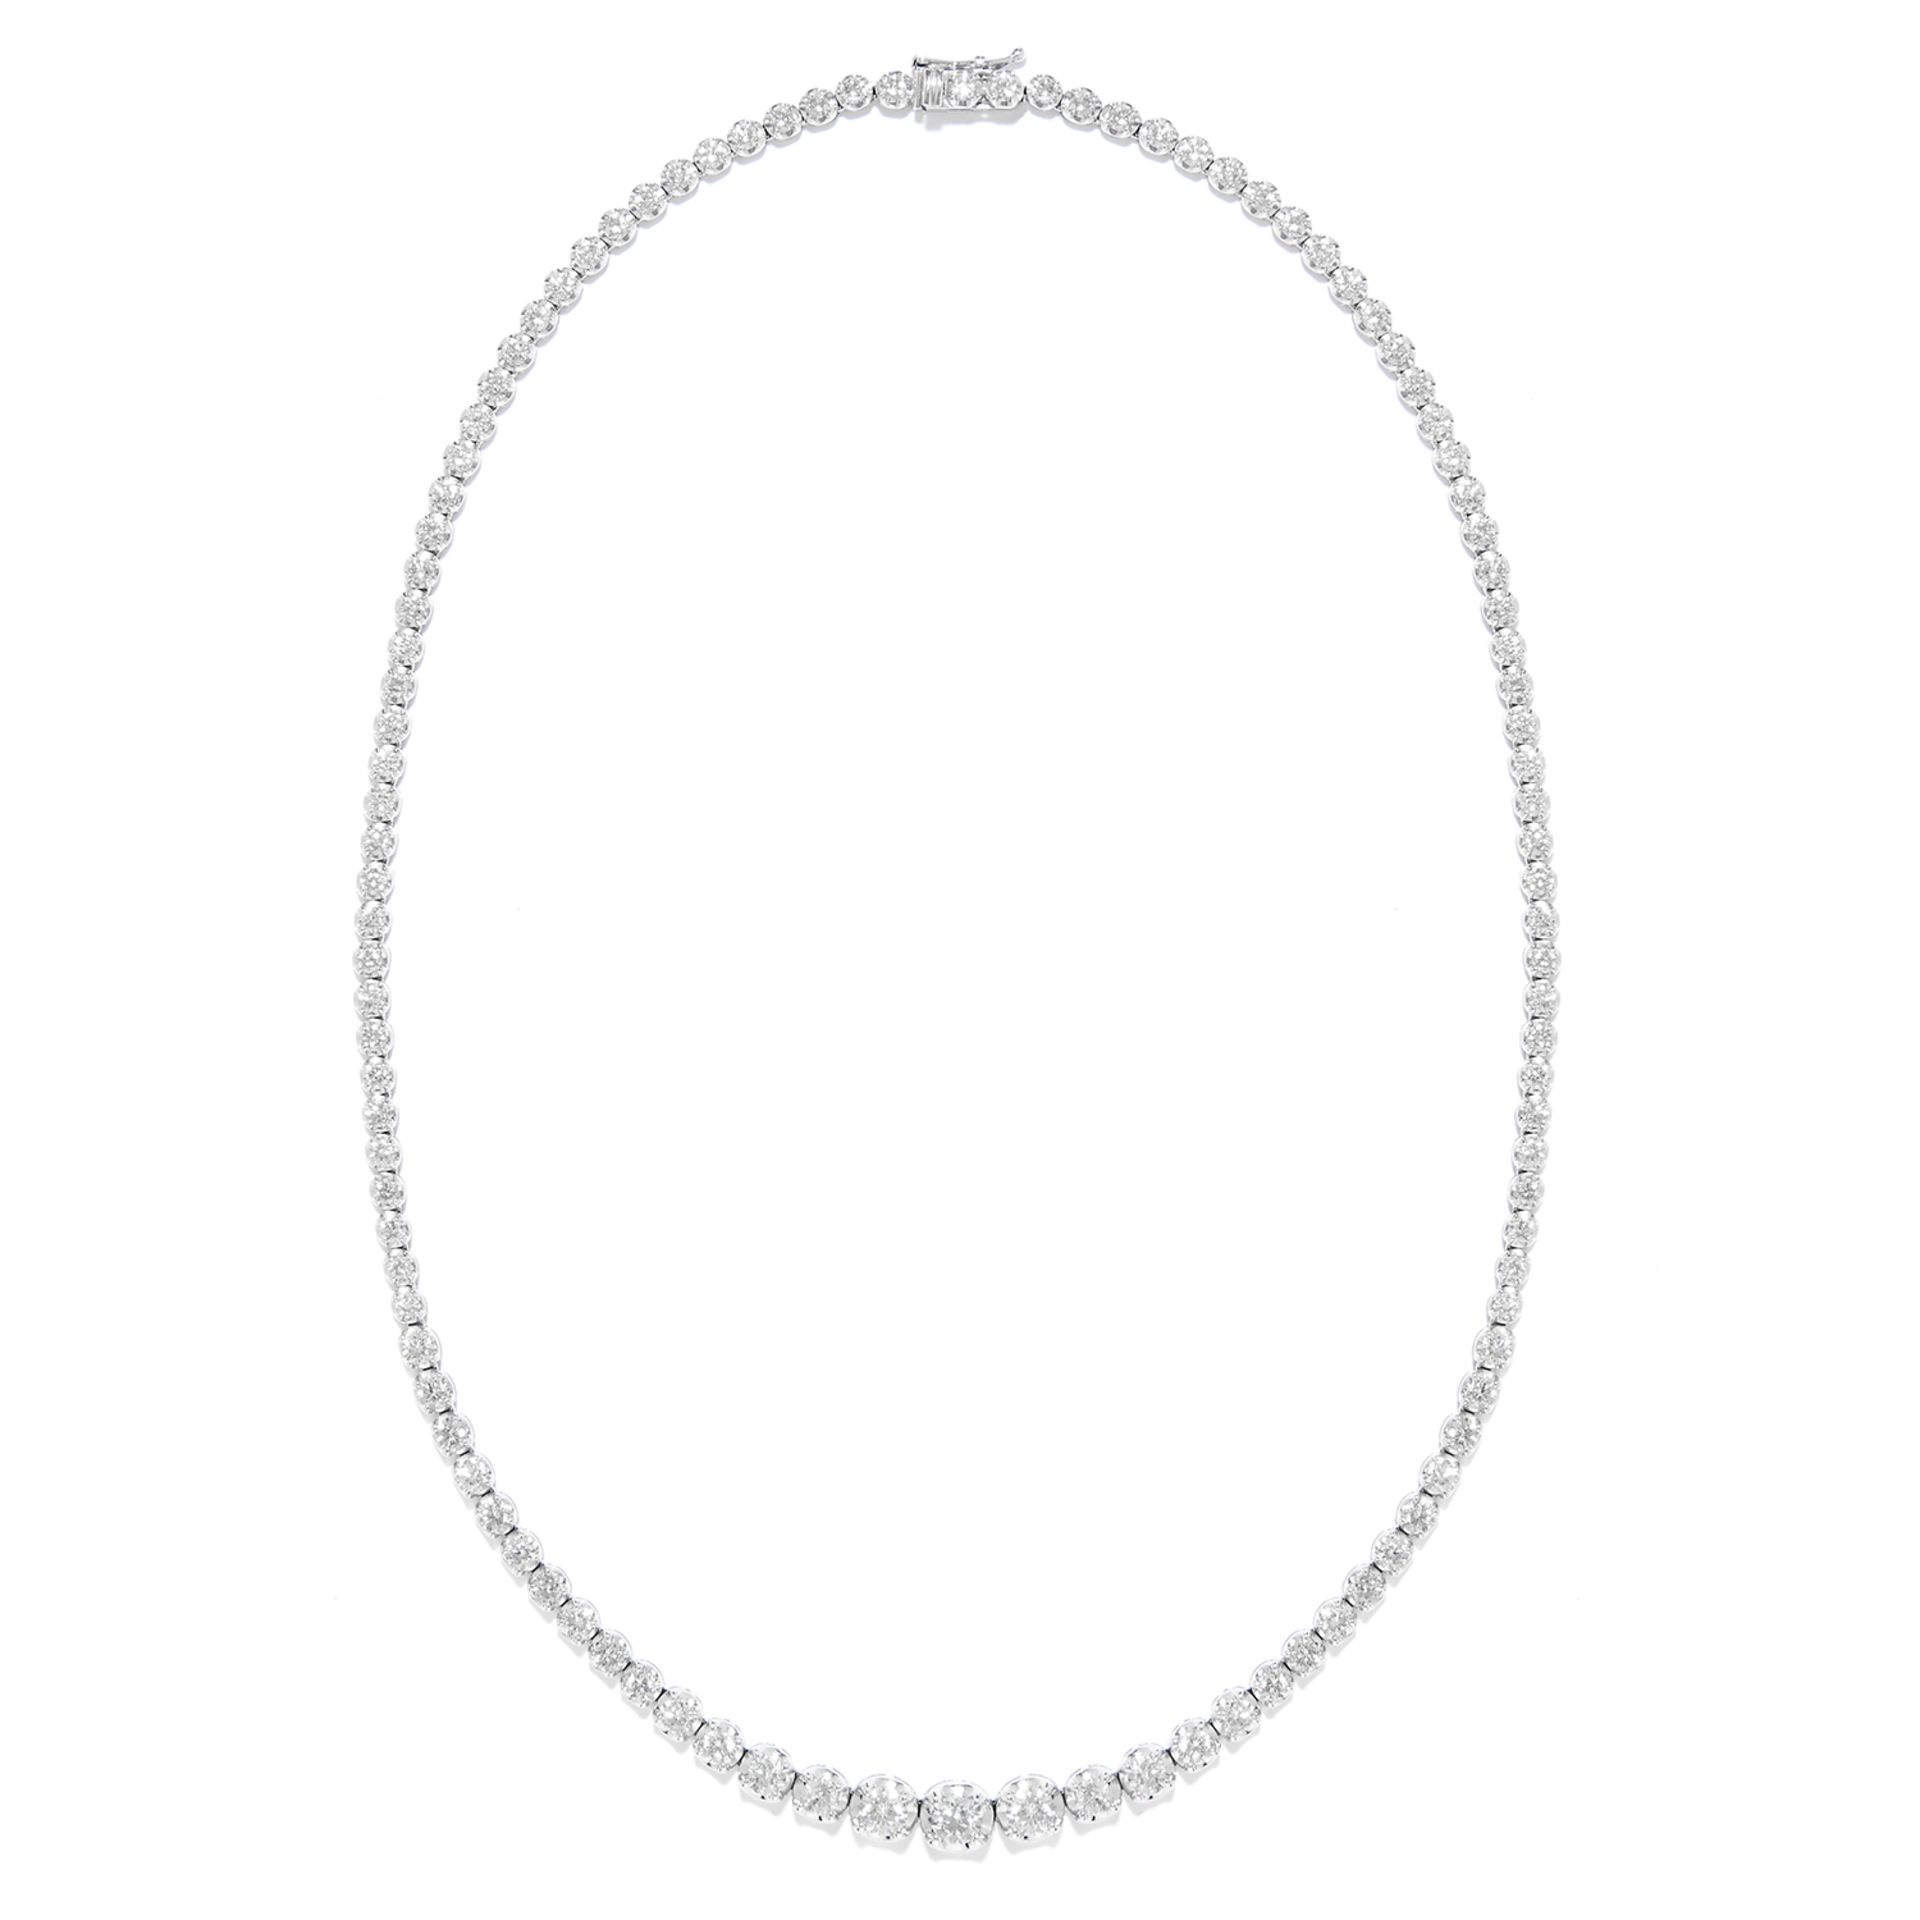 10.00 CARAT DIAMOND RIVIERA NECKLACE in 18ct white gold, set with graduating round cut diamonds